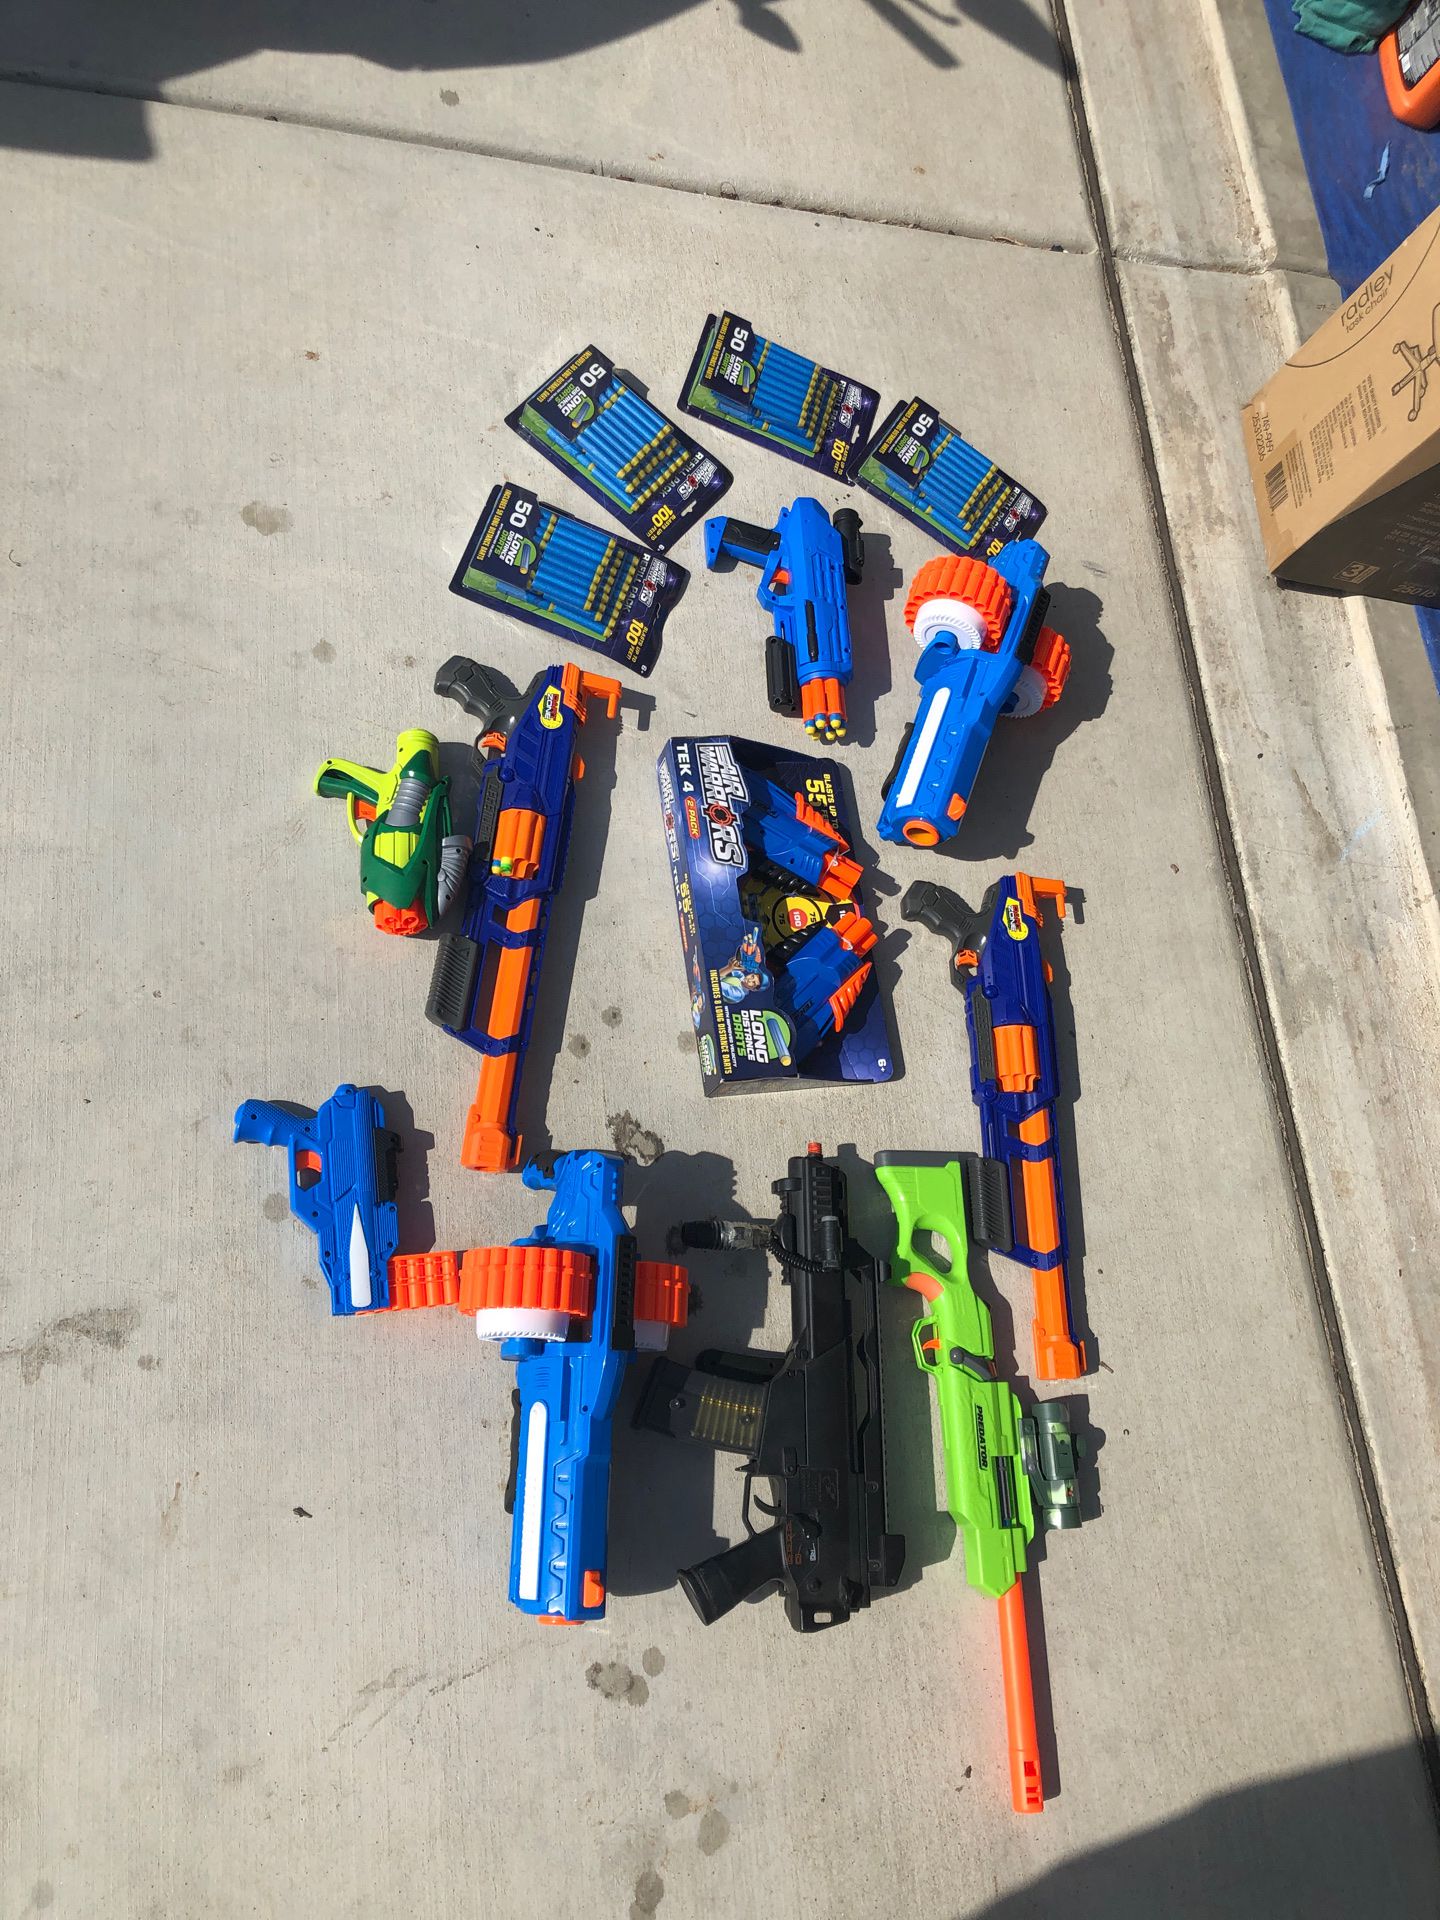 $80 OBO Nerf guns need gone